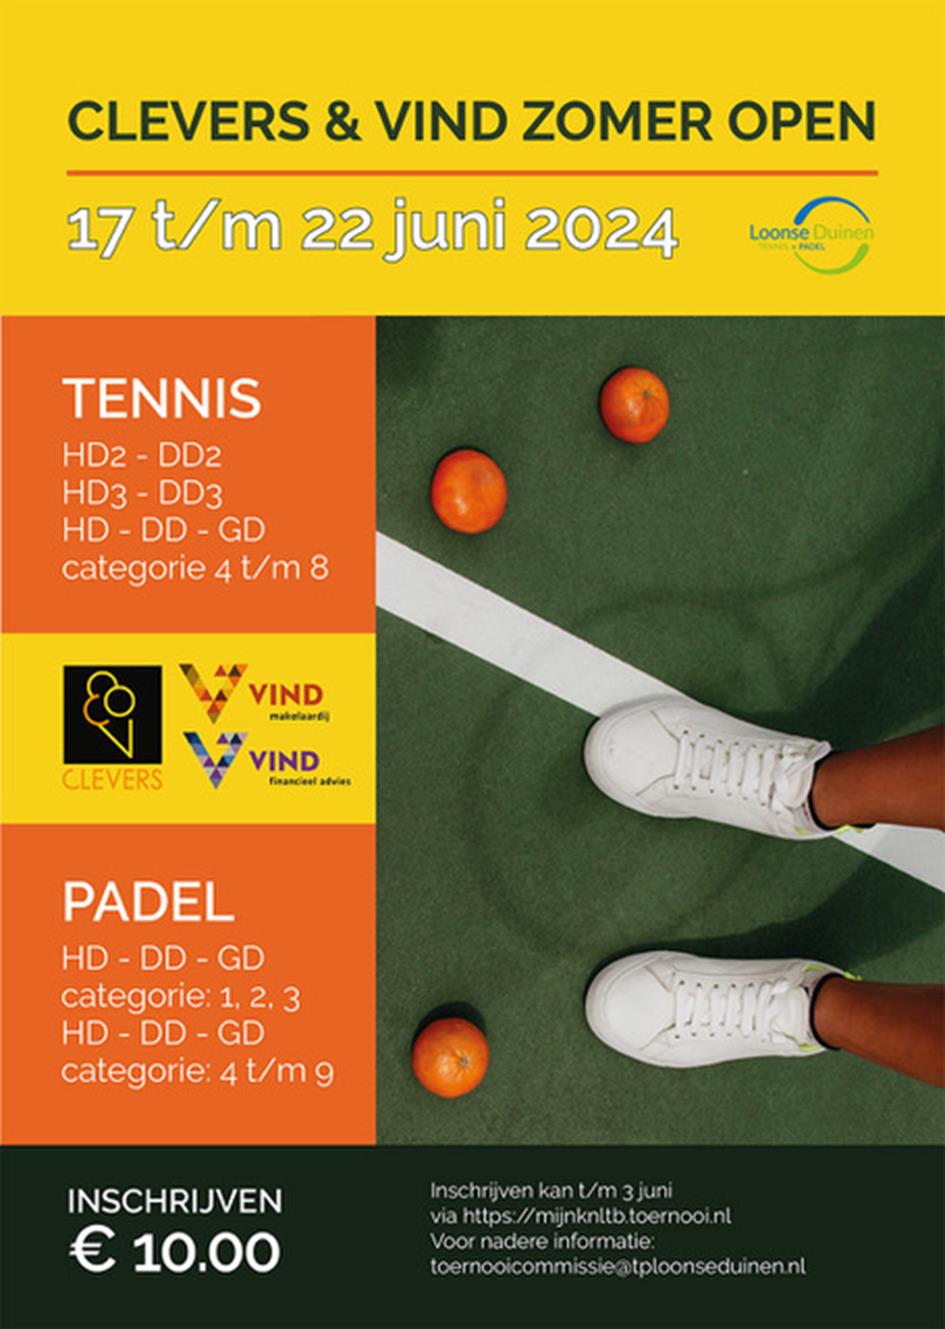 2024 clevers zomer open tennis en padel A3 (1).jpeg